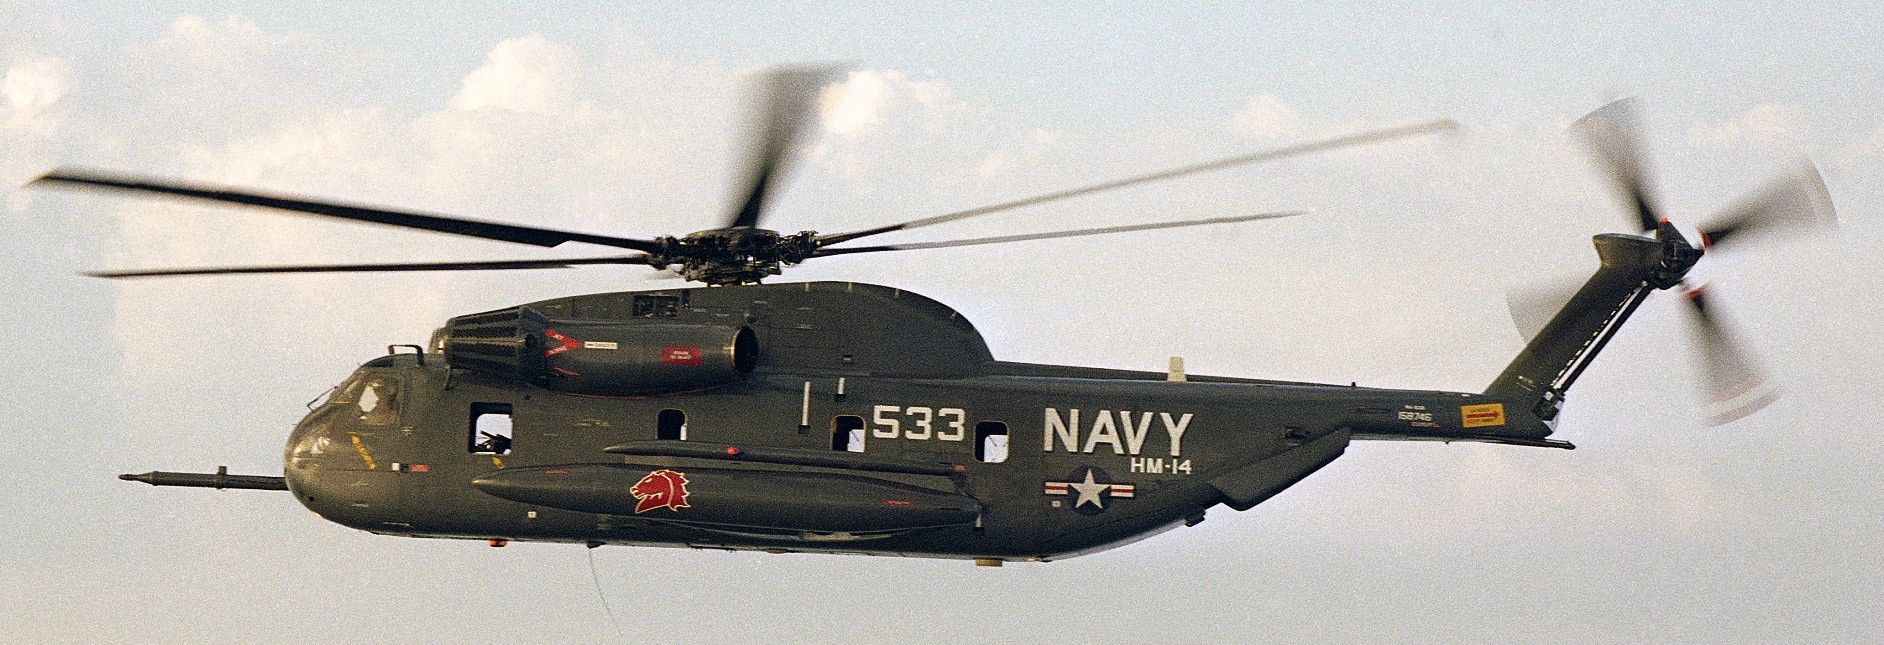 hm-14 vanguard helicopter mine countermeasures squadron navy rh-53d sea stallion 65